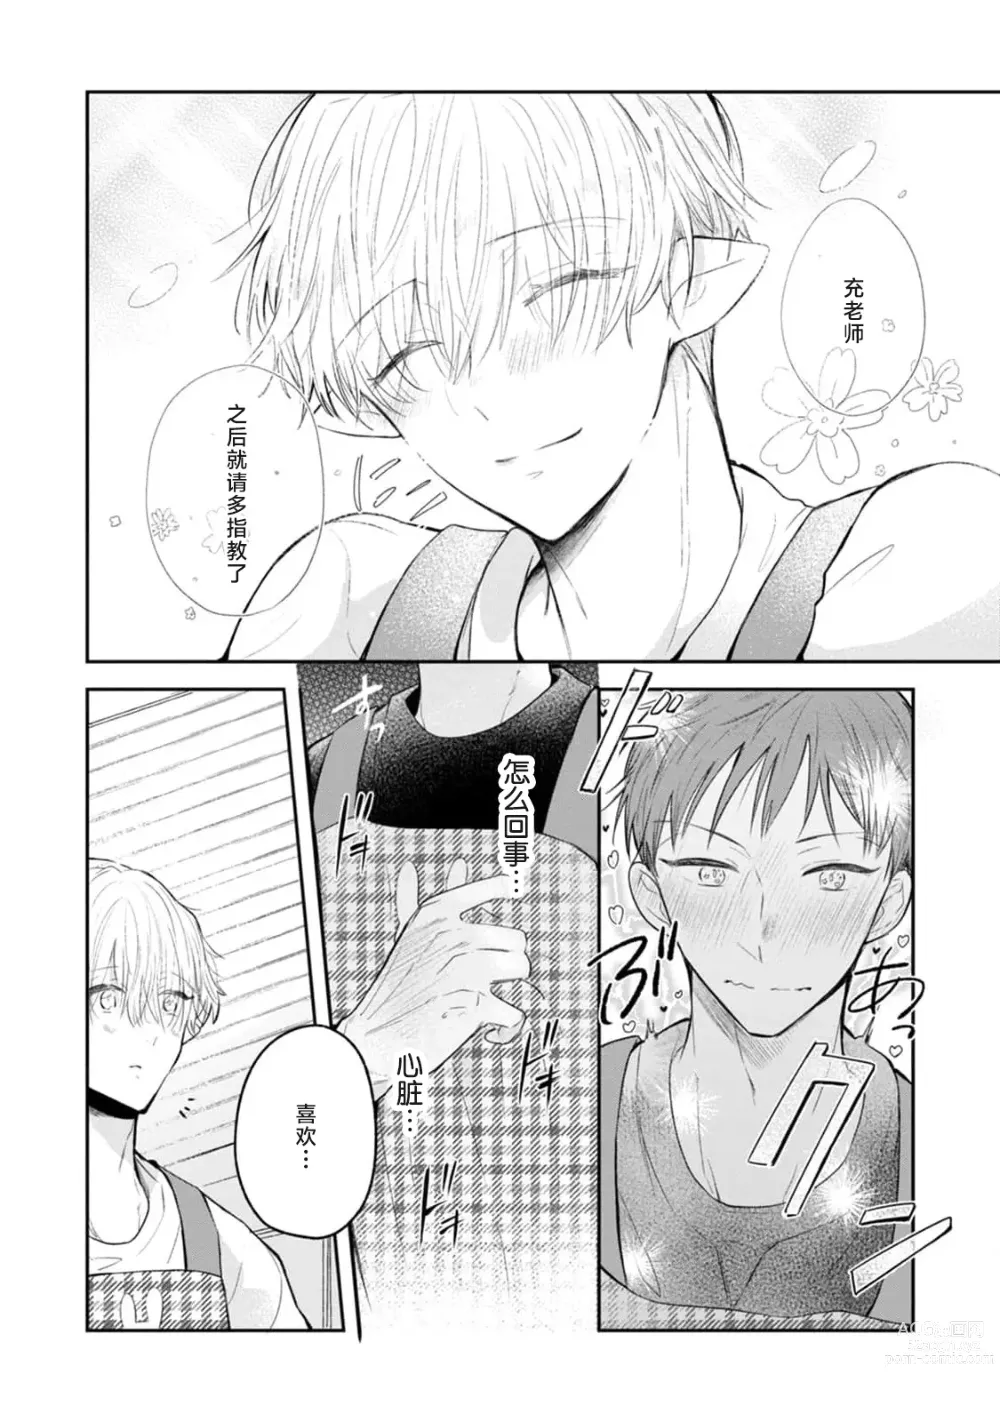 Page 6 of manga 叶羽老师全部是第一次 1-6 end